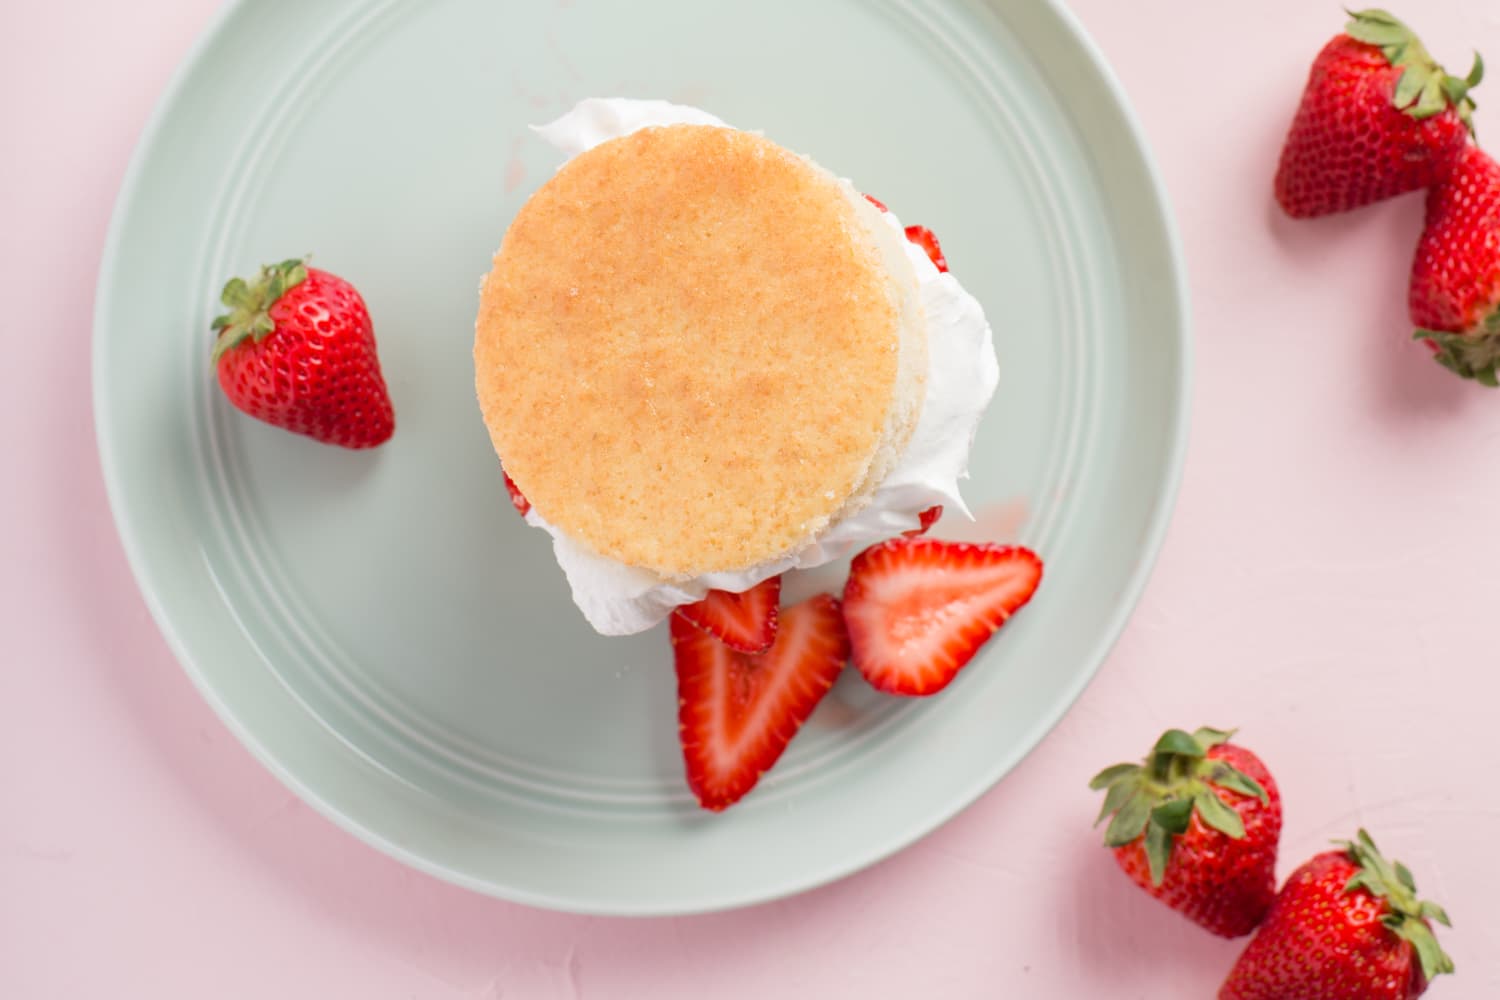 Macerated Strawberries Recipe (for Shortcake, Pancakes, Waffles)